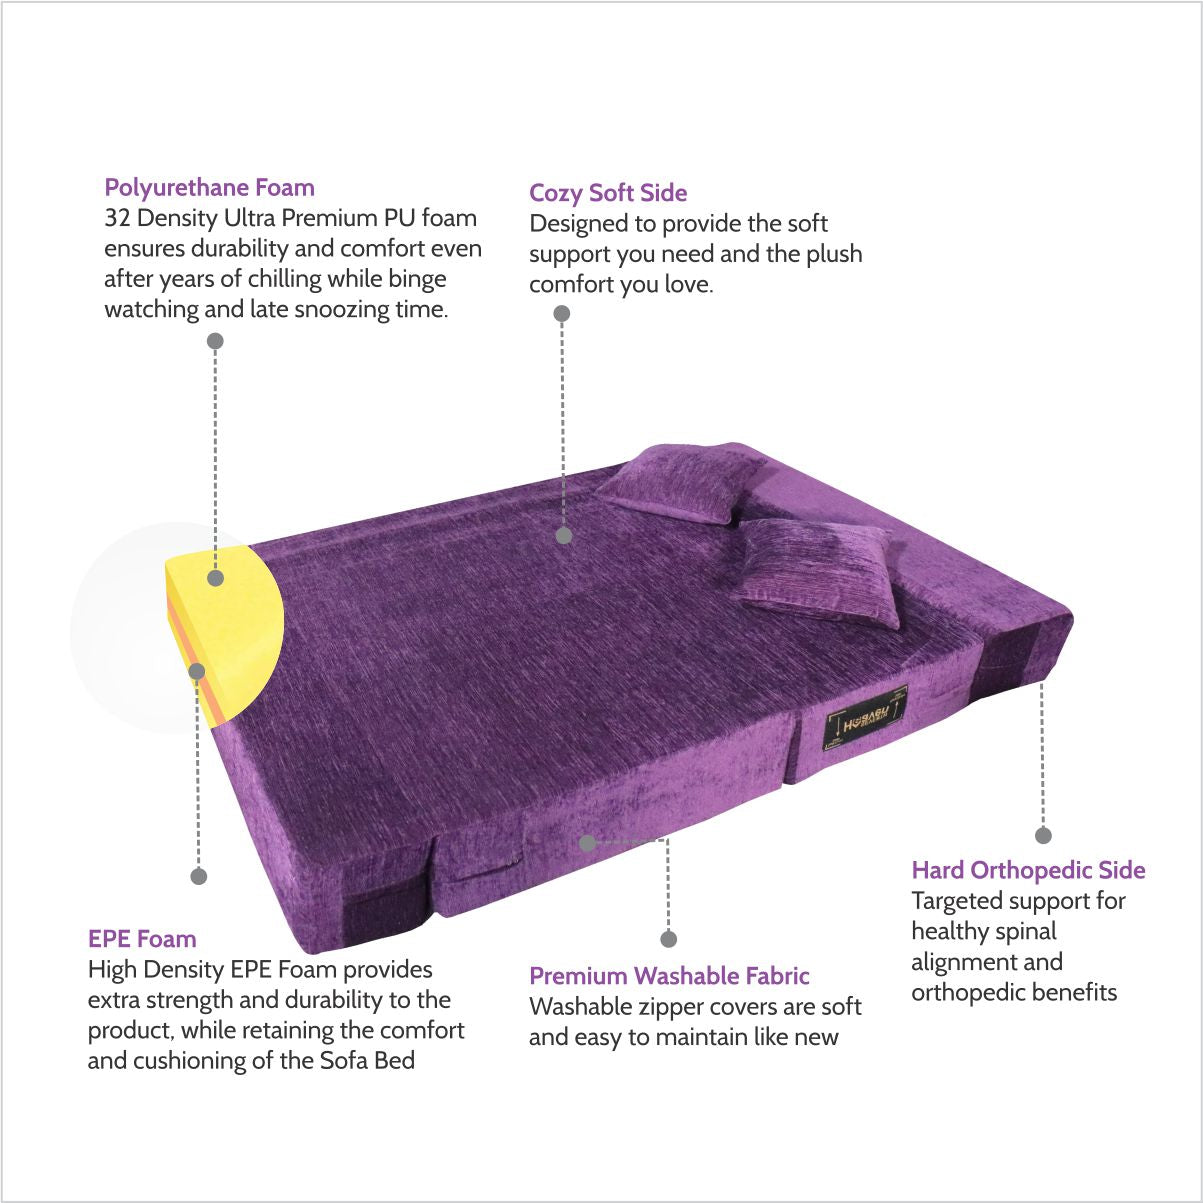 Purple Chenille Molfino Fabric 6×4 Sofa cum Bed with 2 Cushion